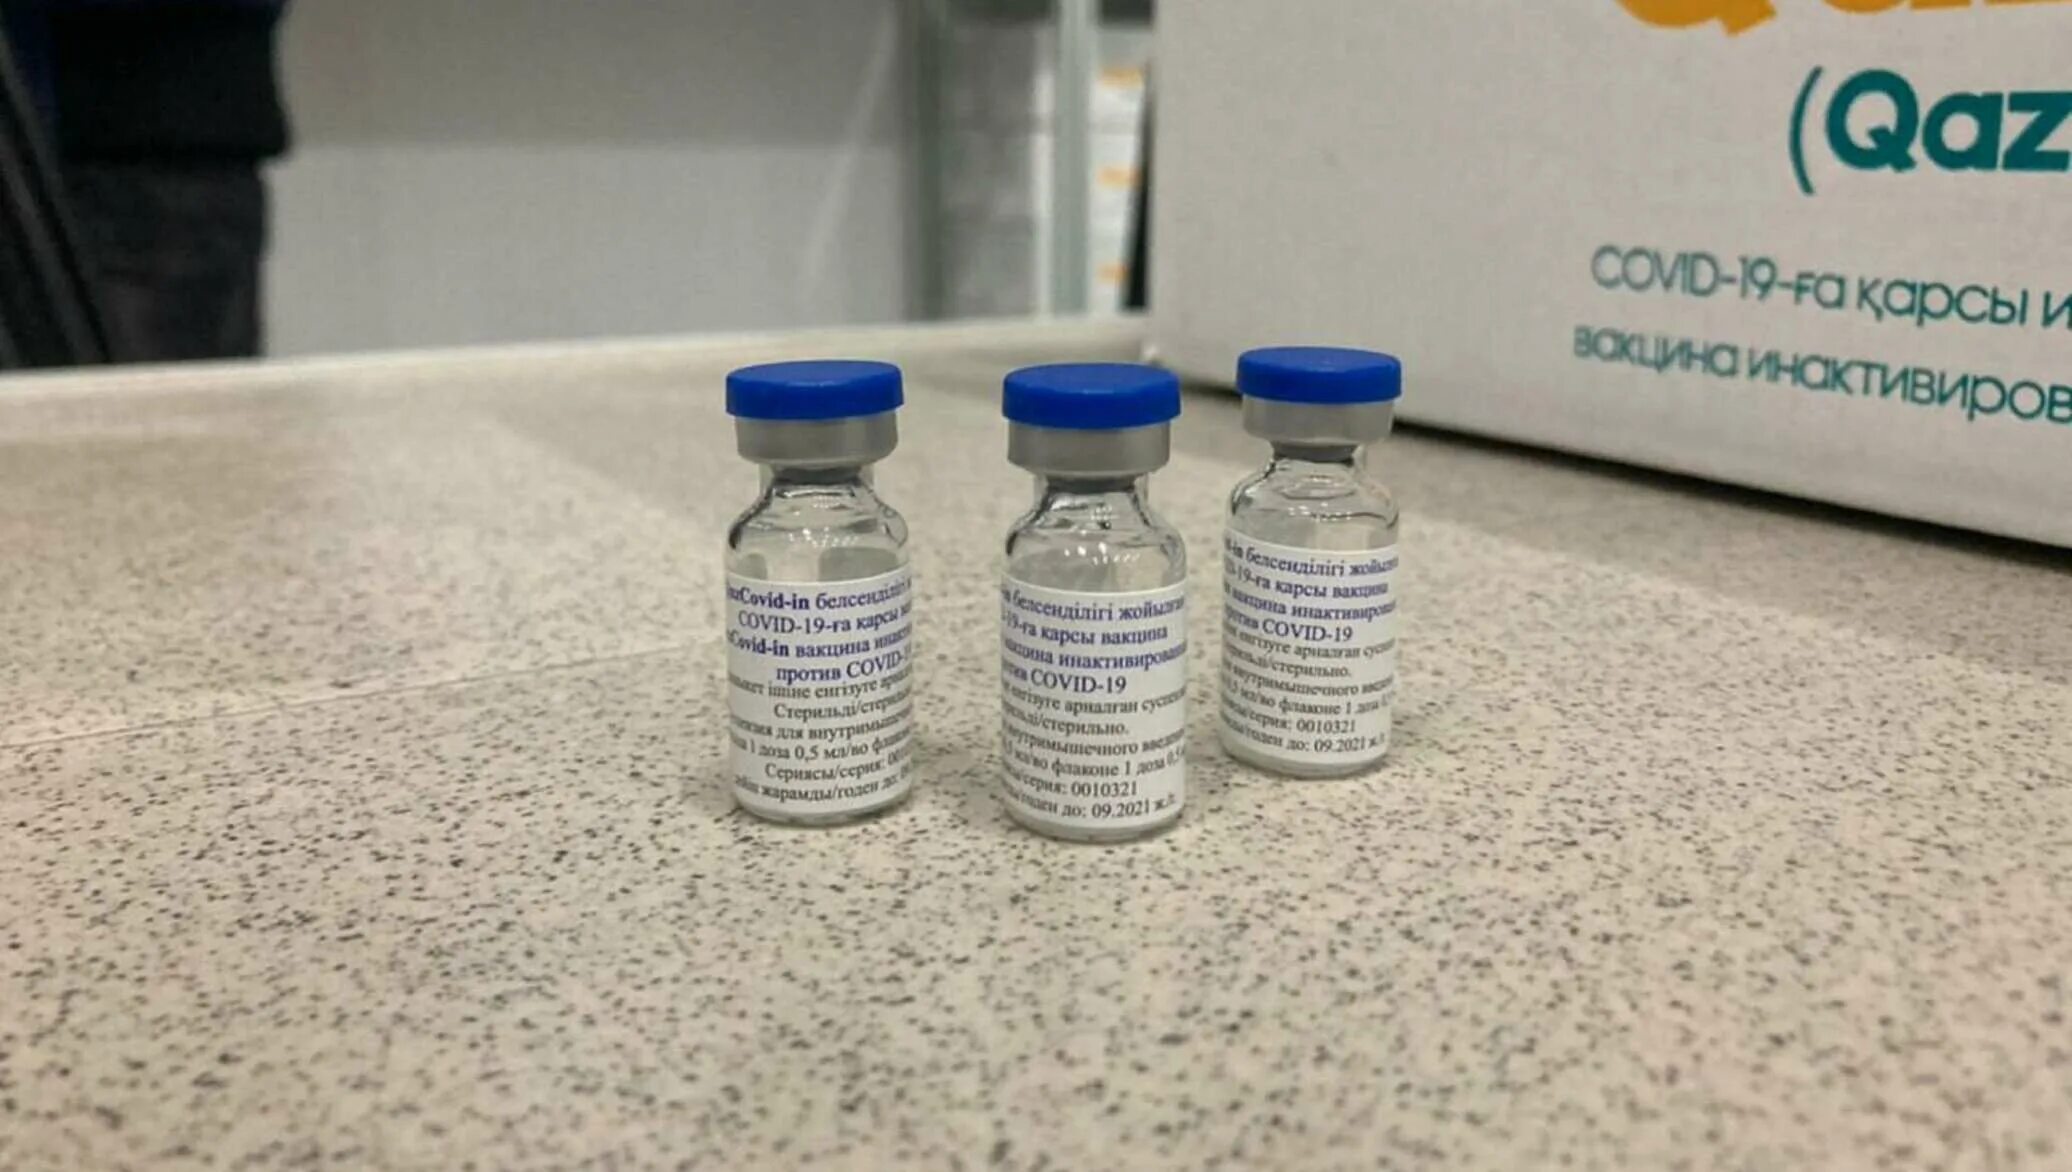 Вакцины для животных в Казахстане. Qazvac. Казвак вакцина от коронавируса фото упаковки.